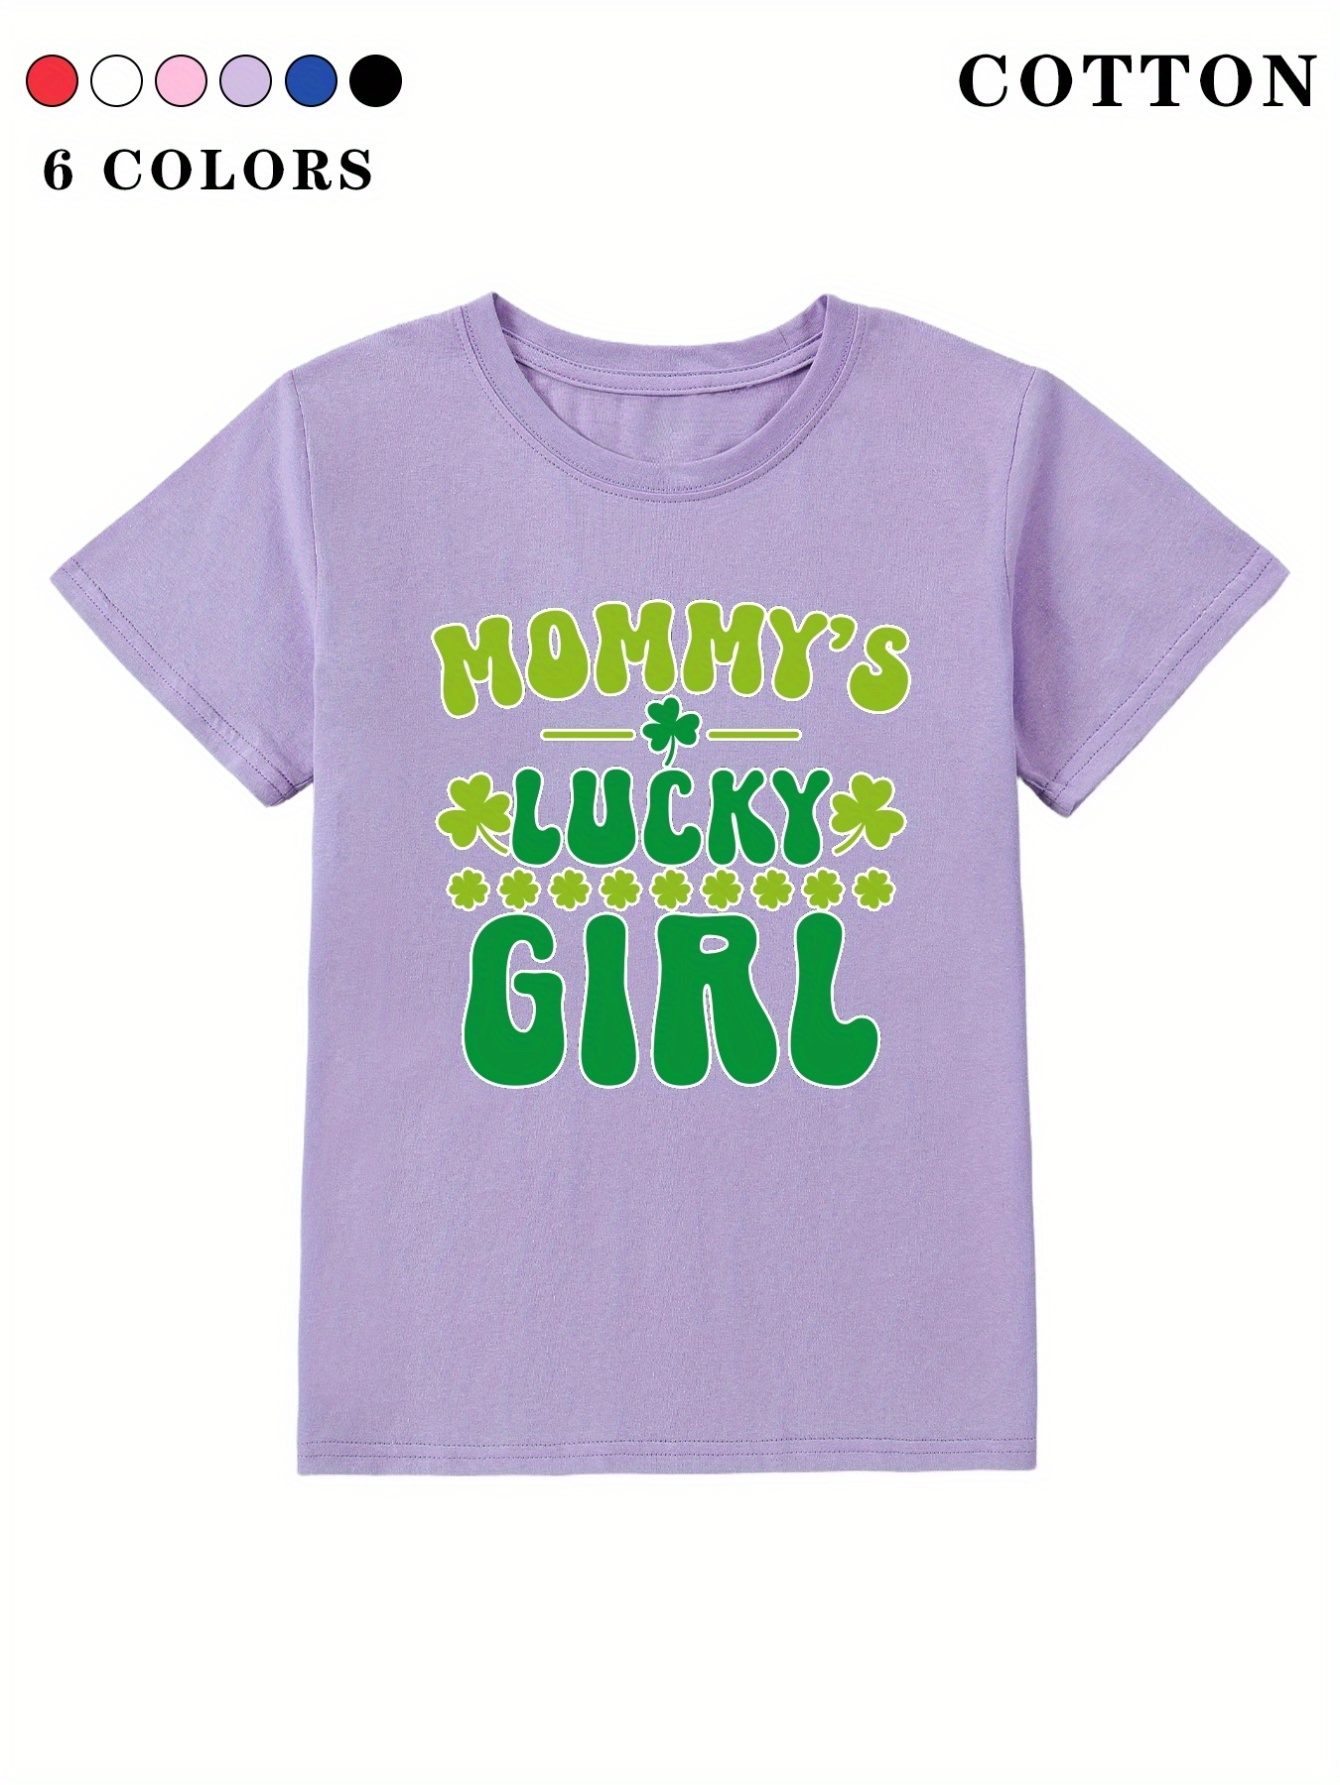  Lucky Brand Girls Short Sleeve Graphic T-Shirt, Cotton Tee